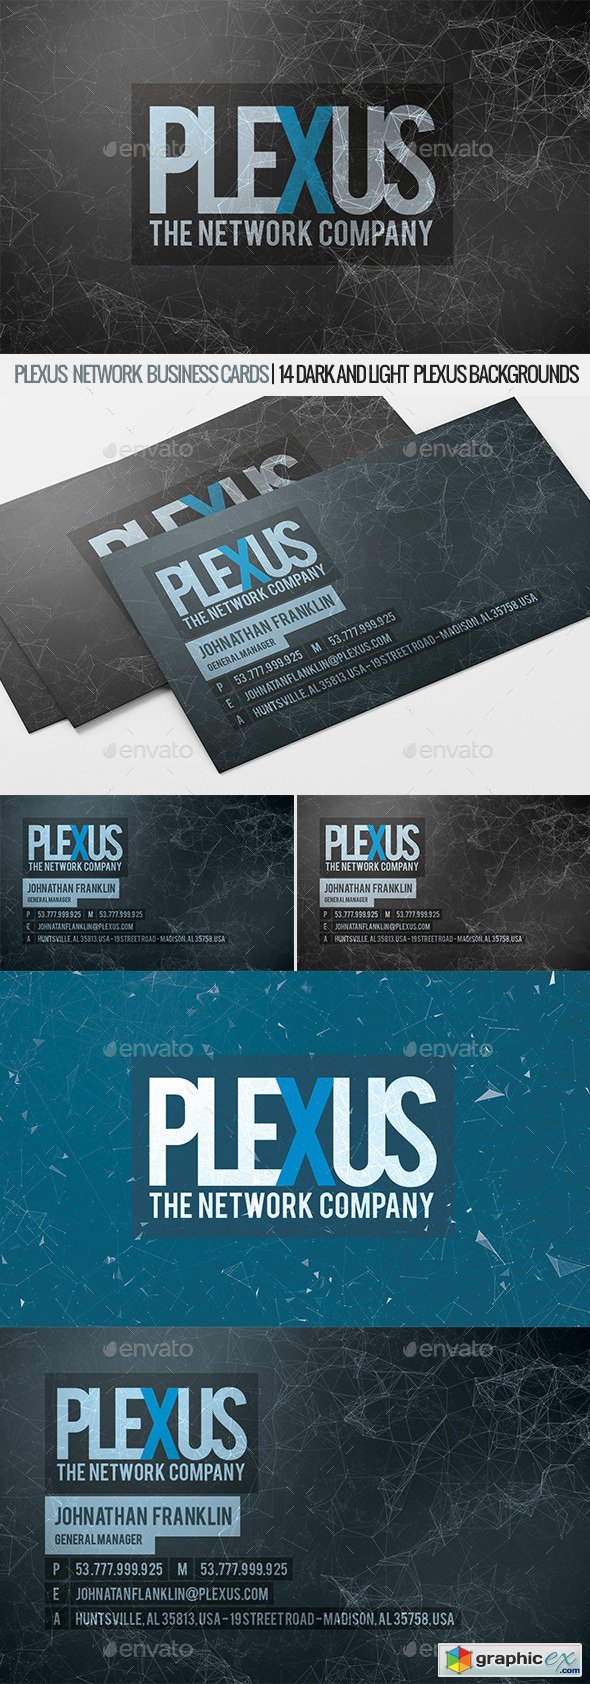 Plexus Business Cards